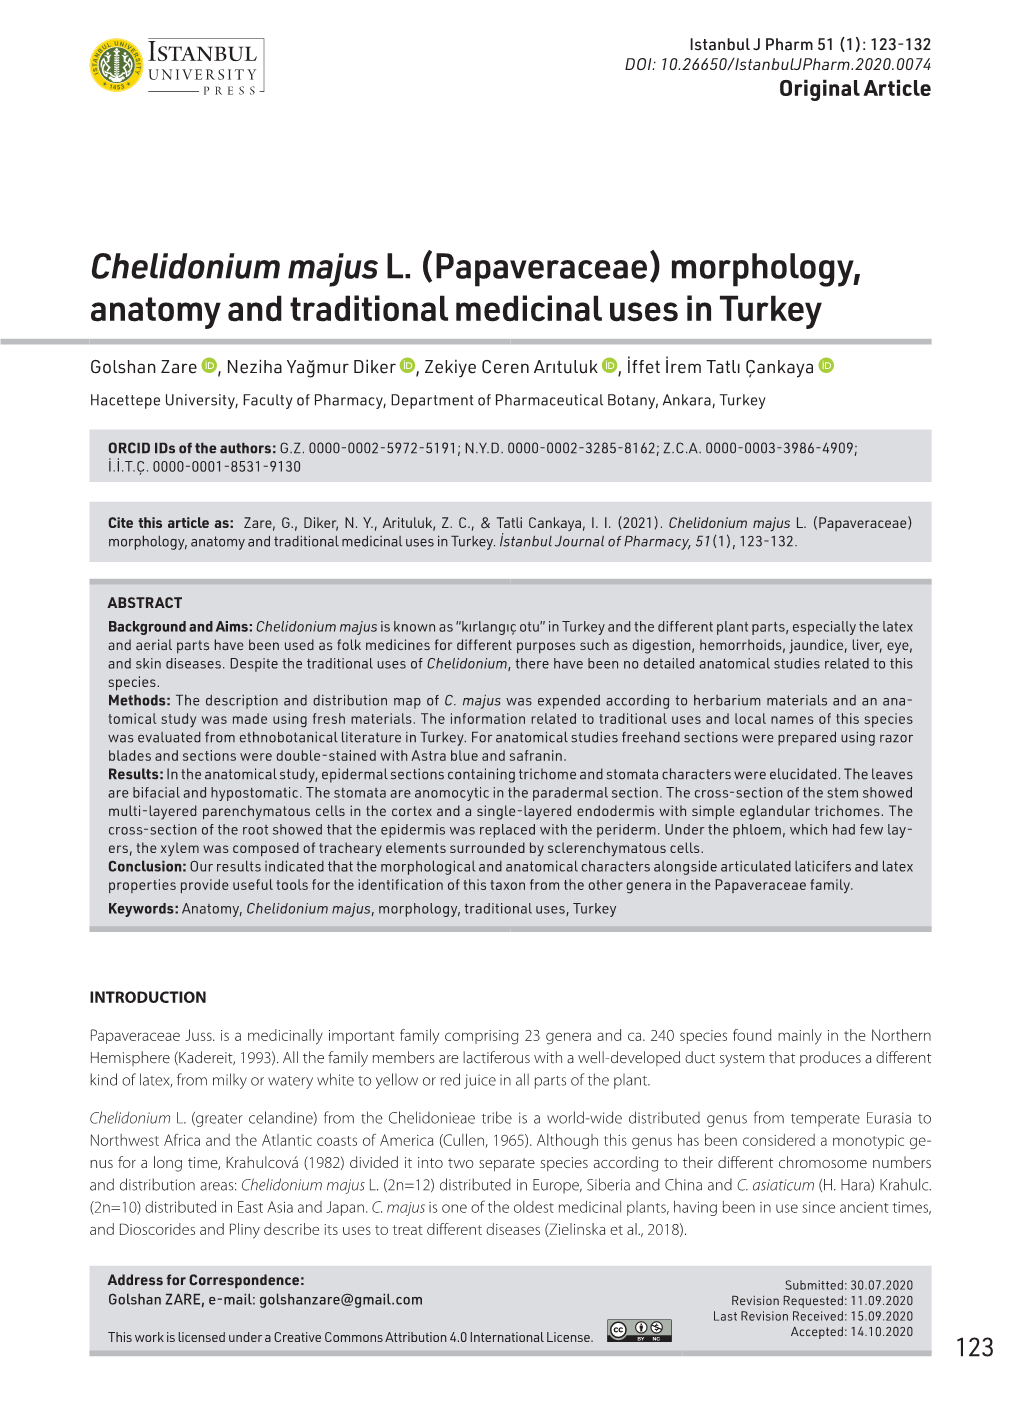 Chelidonium Majusl